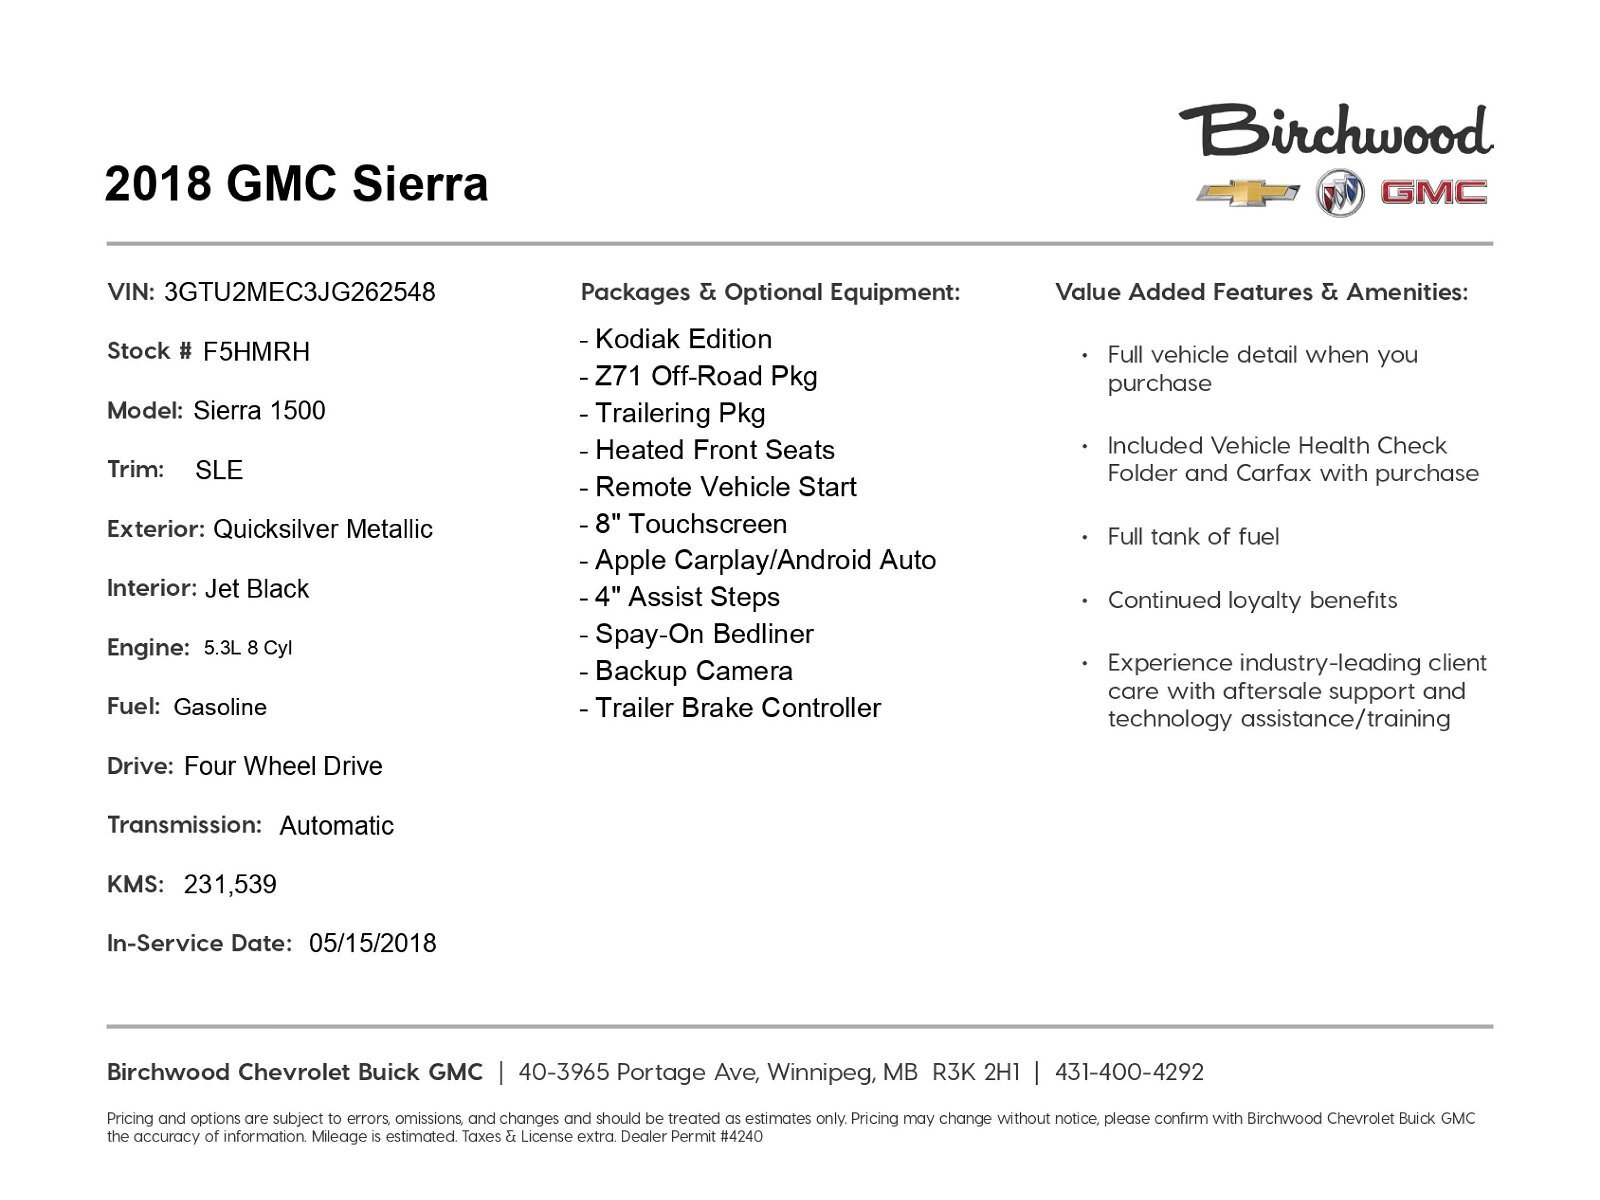 2018 GMC Sierra 1500 SLE 2-year Maintenance Free!